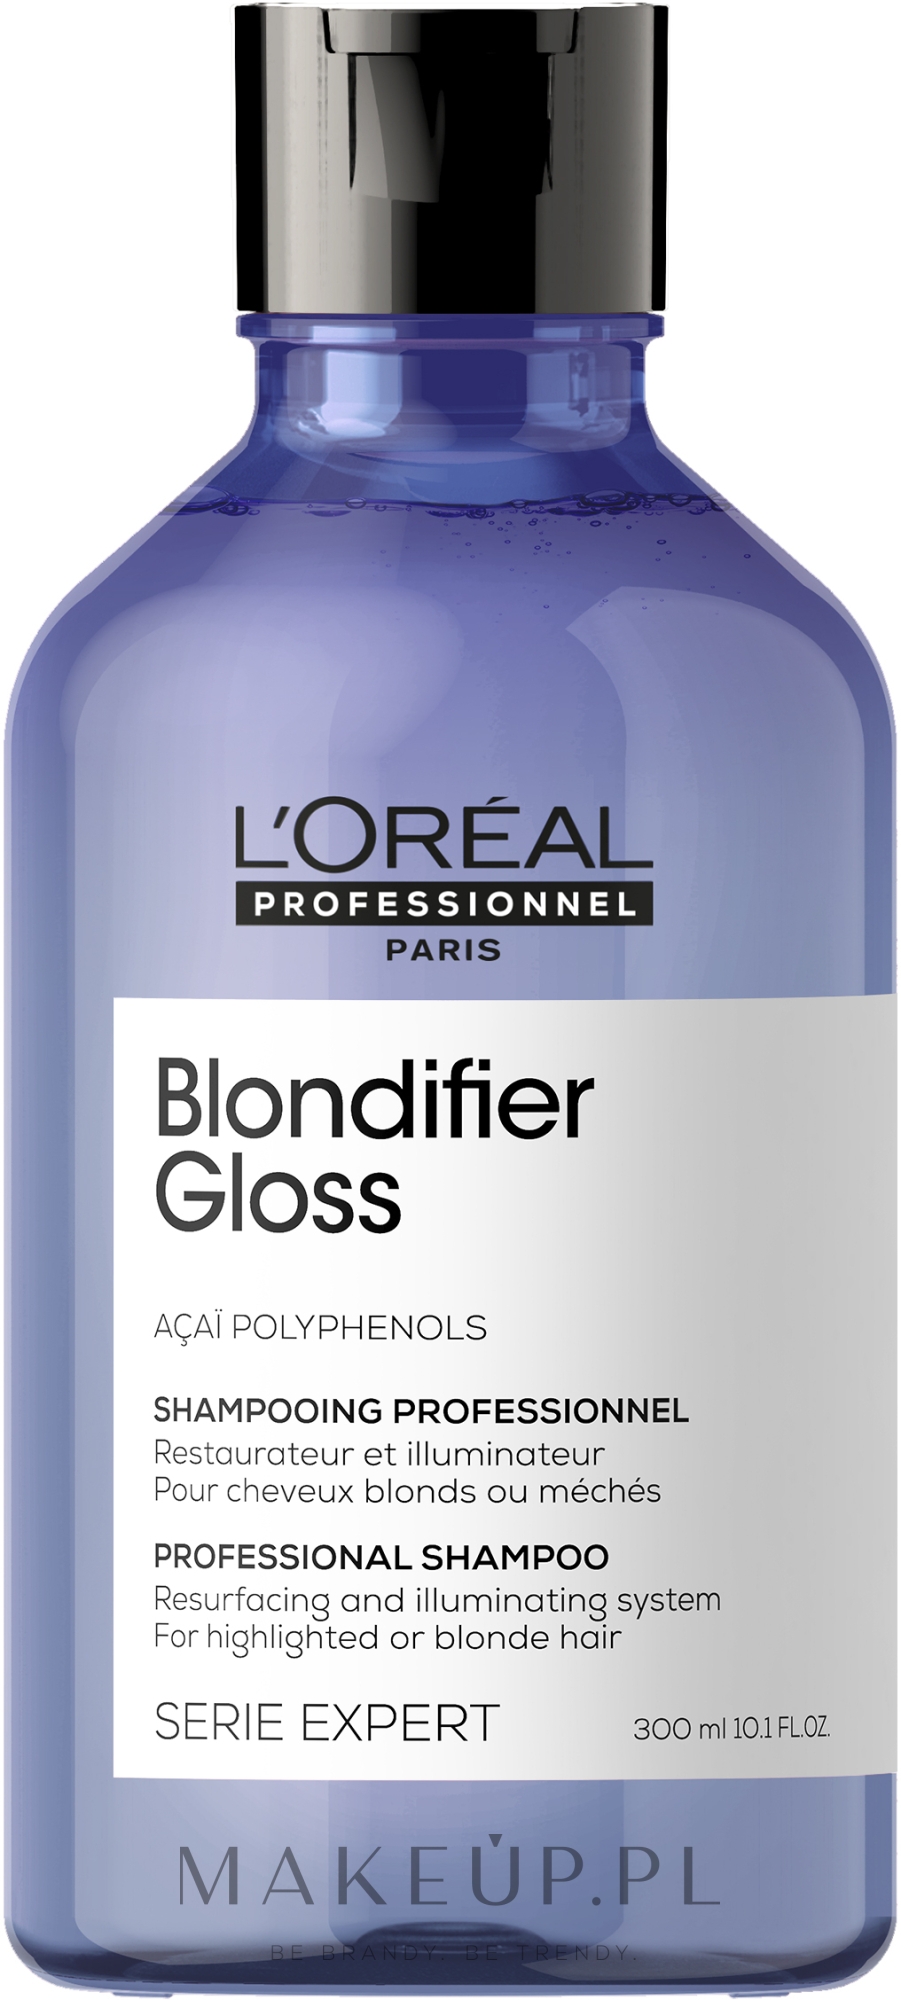 szampon blondifier